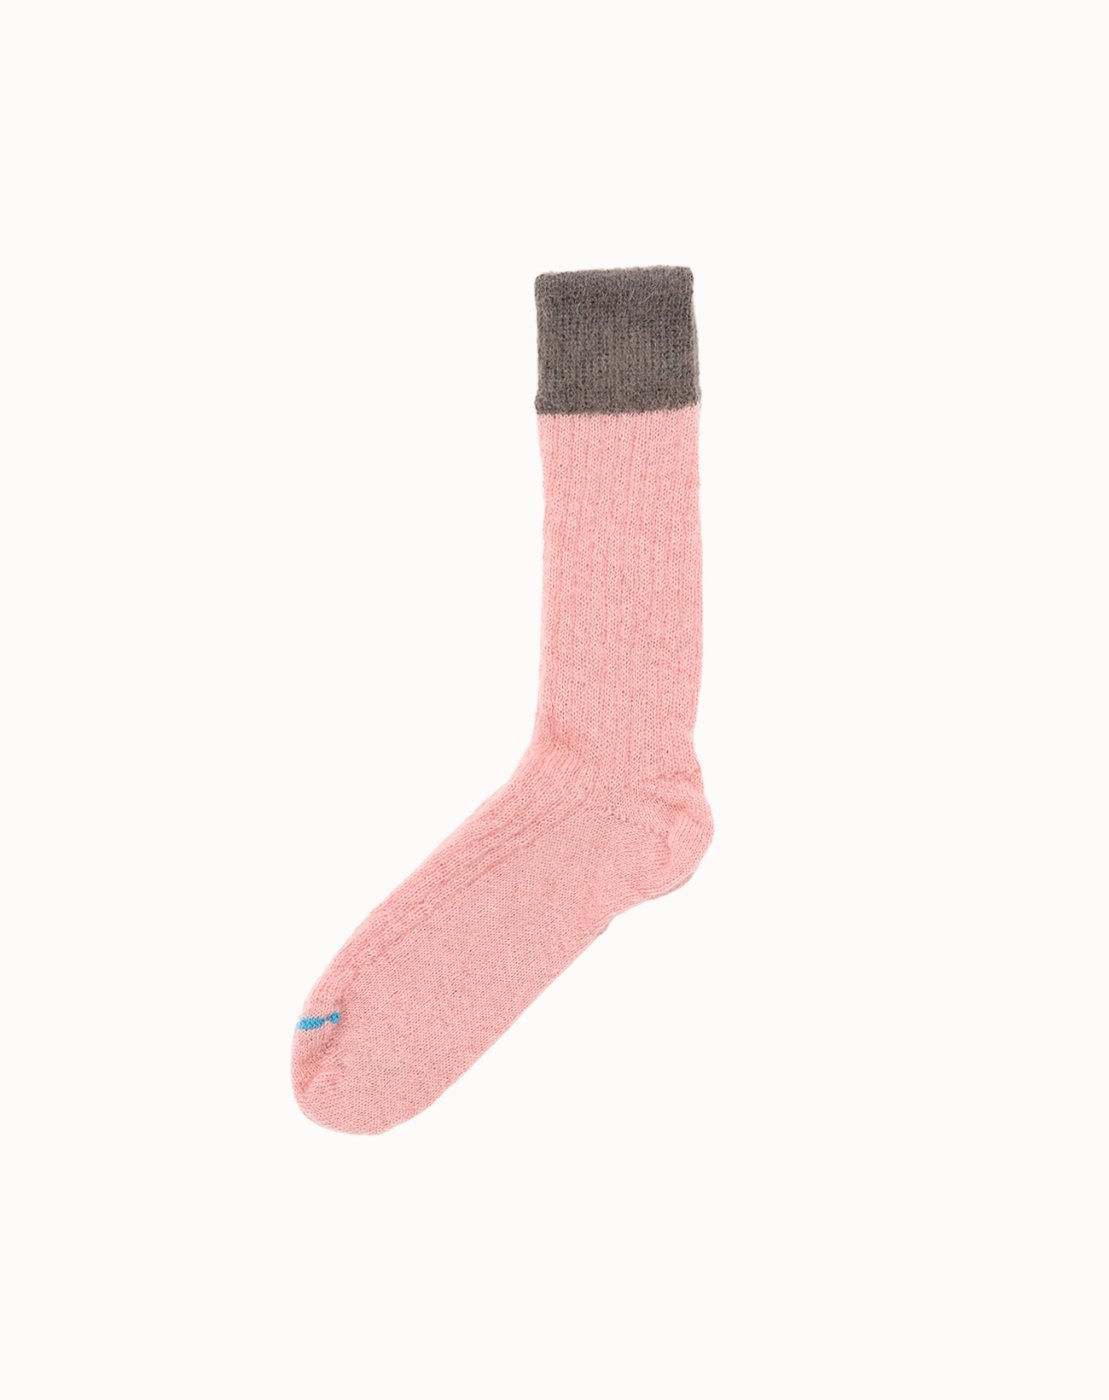 leur logette - 【Corgi x leur logette】 Mohair Socks - Pink